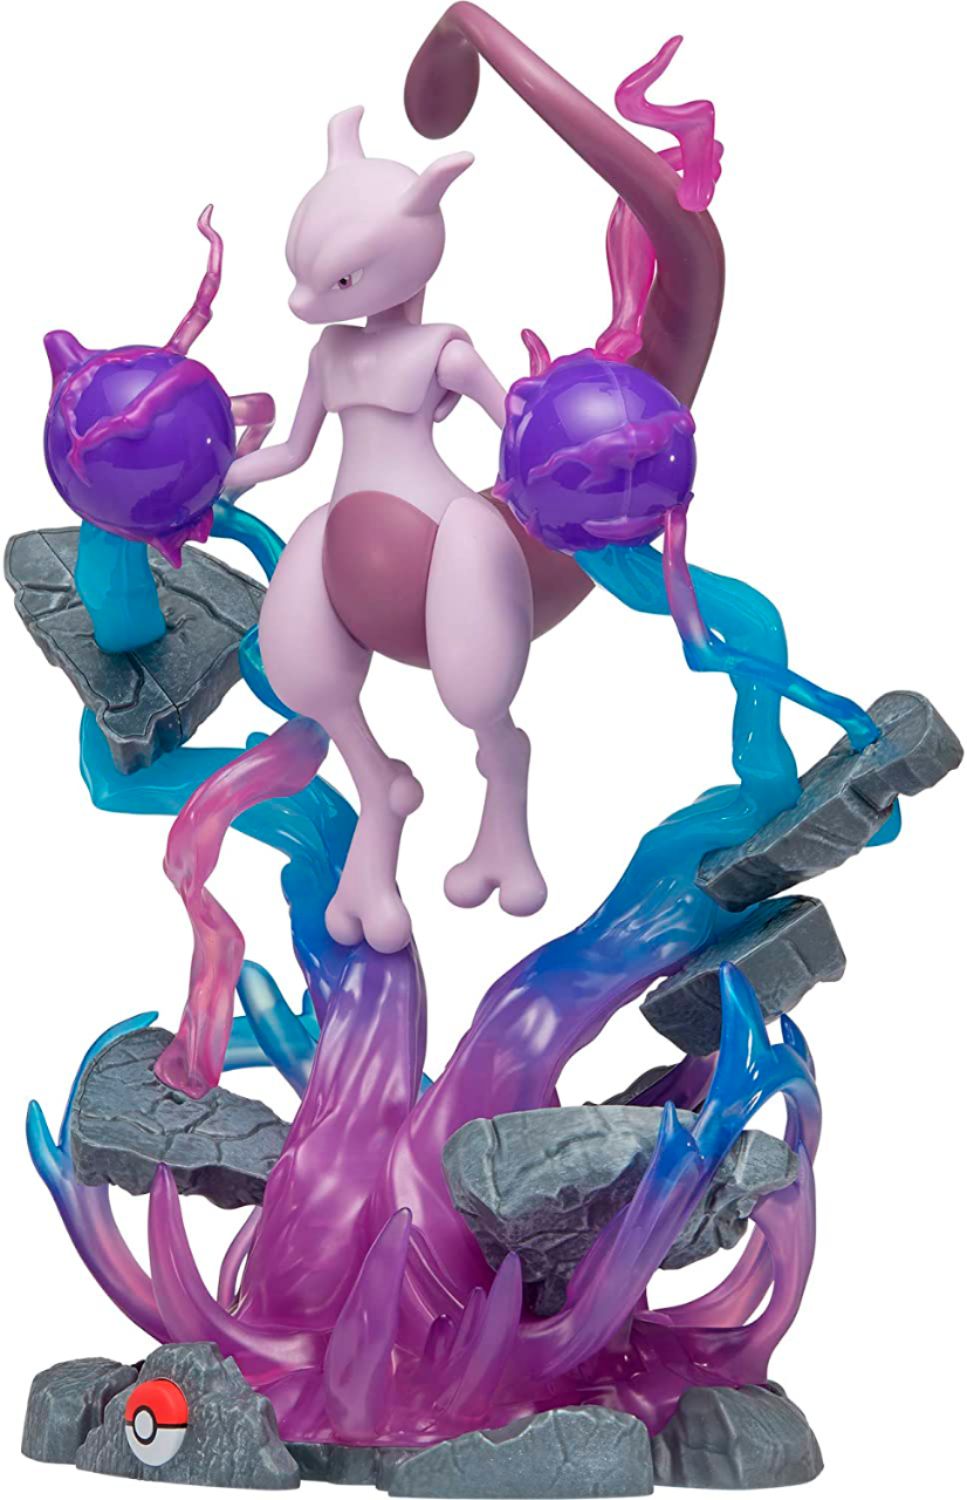 Mewtwo Pokemon Figure Statue Pokemonfanart Gift for 